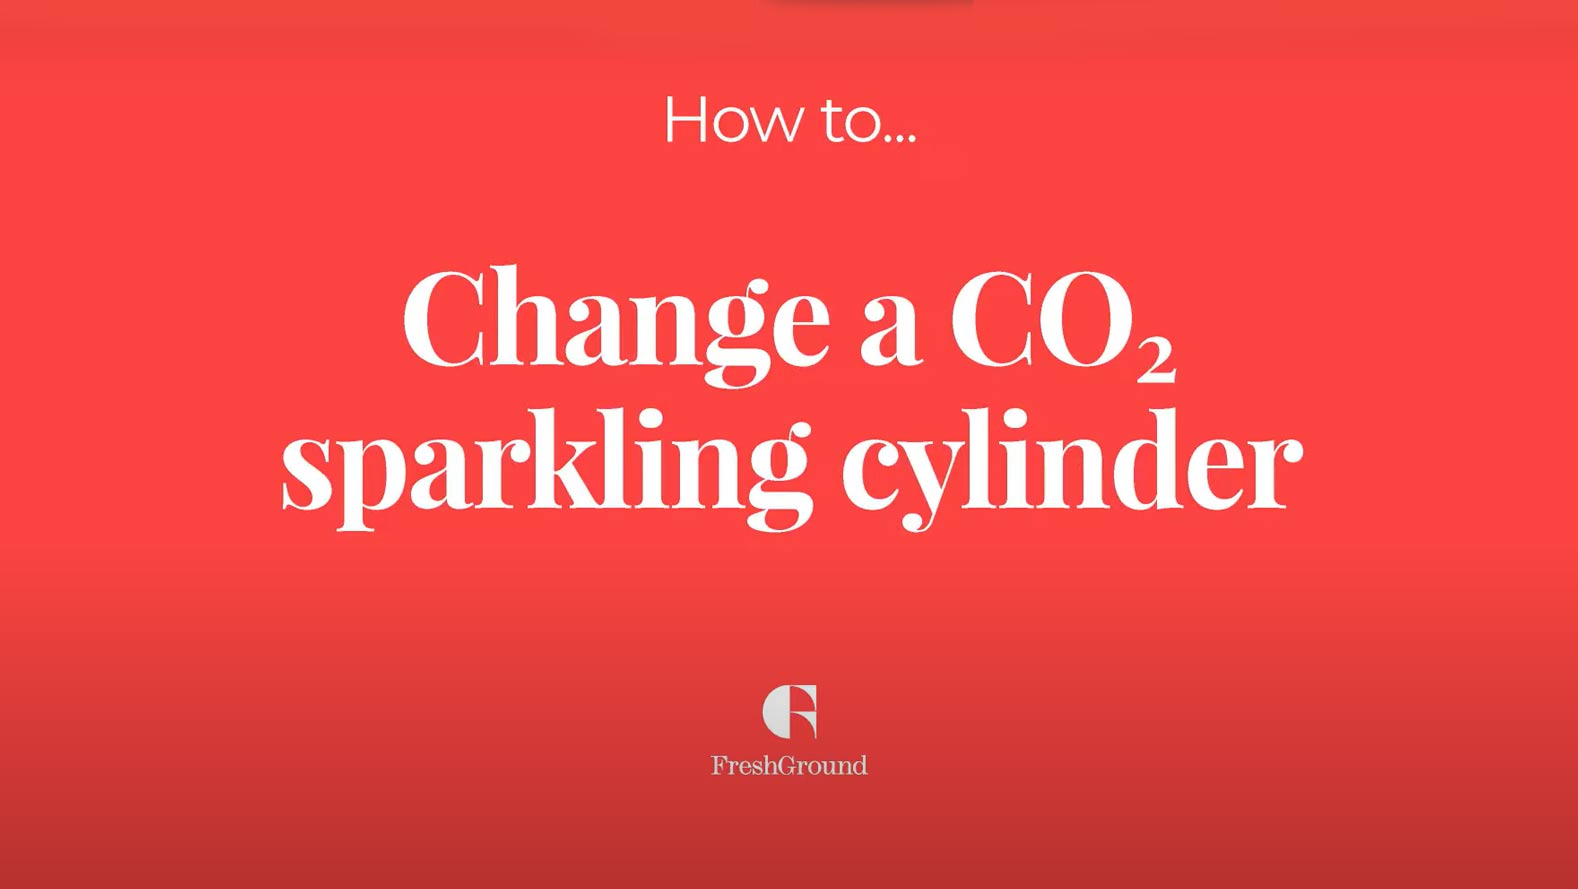 Change a CO2 cylinder